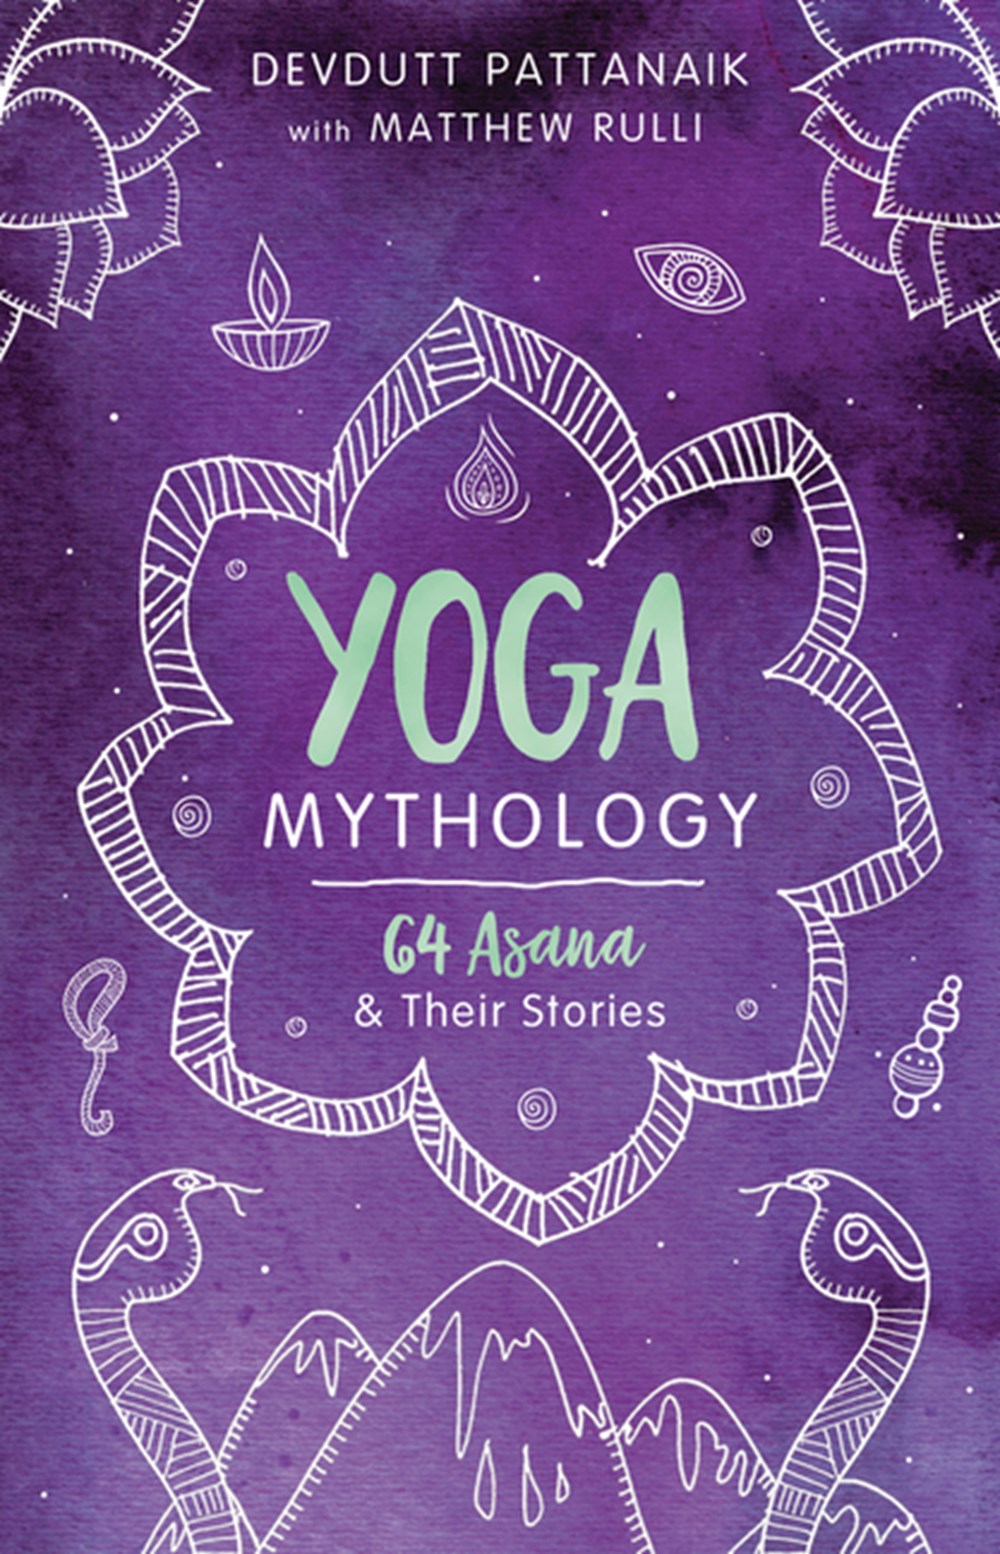 Yoga Mythology 64 Asana and Their Stories